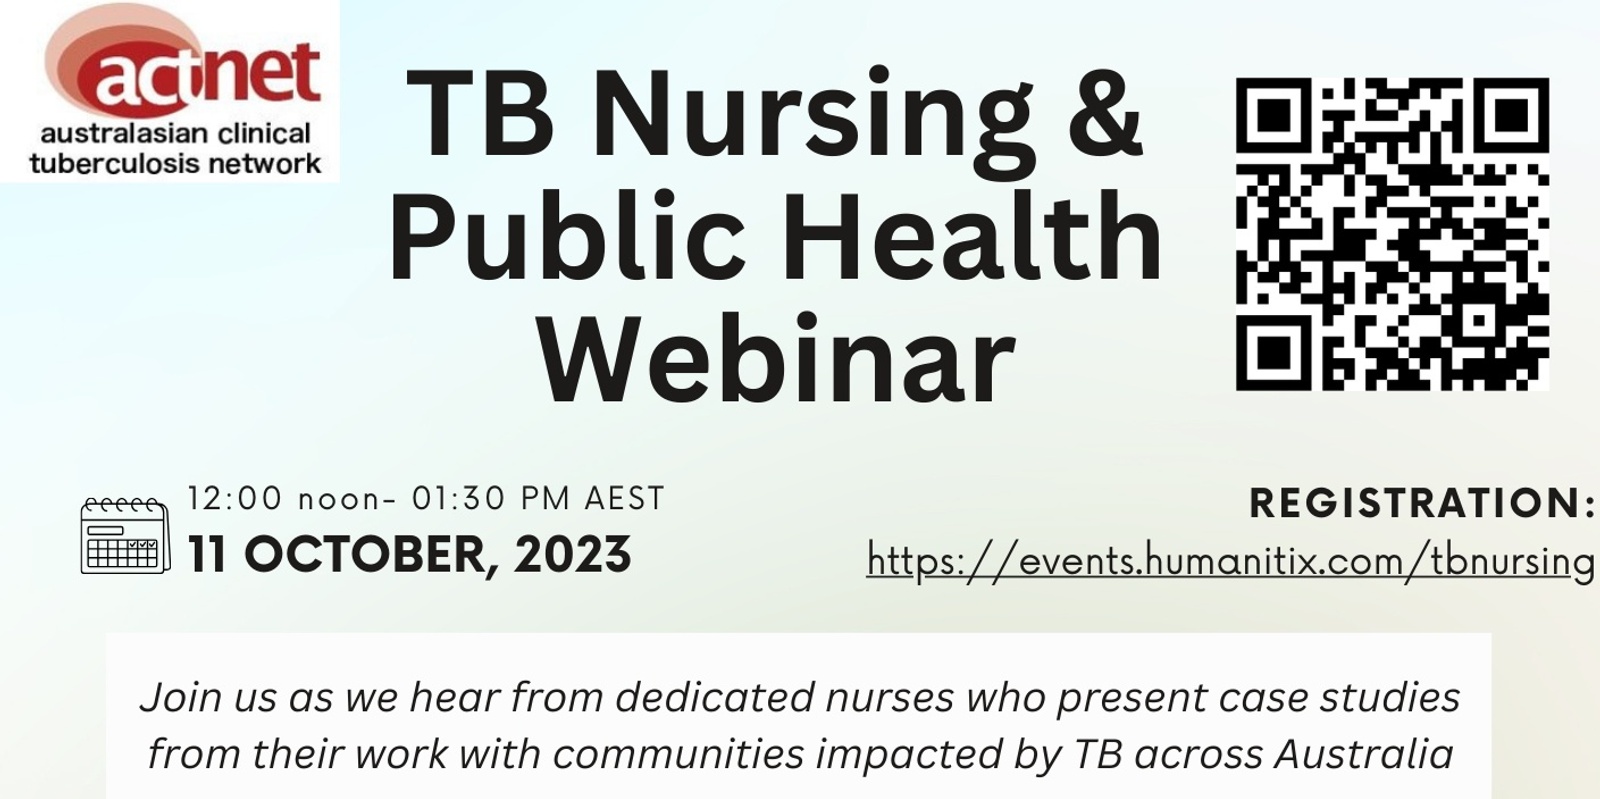 Banner image for ACTnet TB Nursing & Public Health Webinar